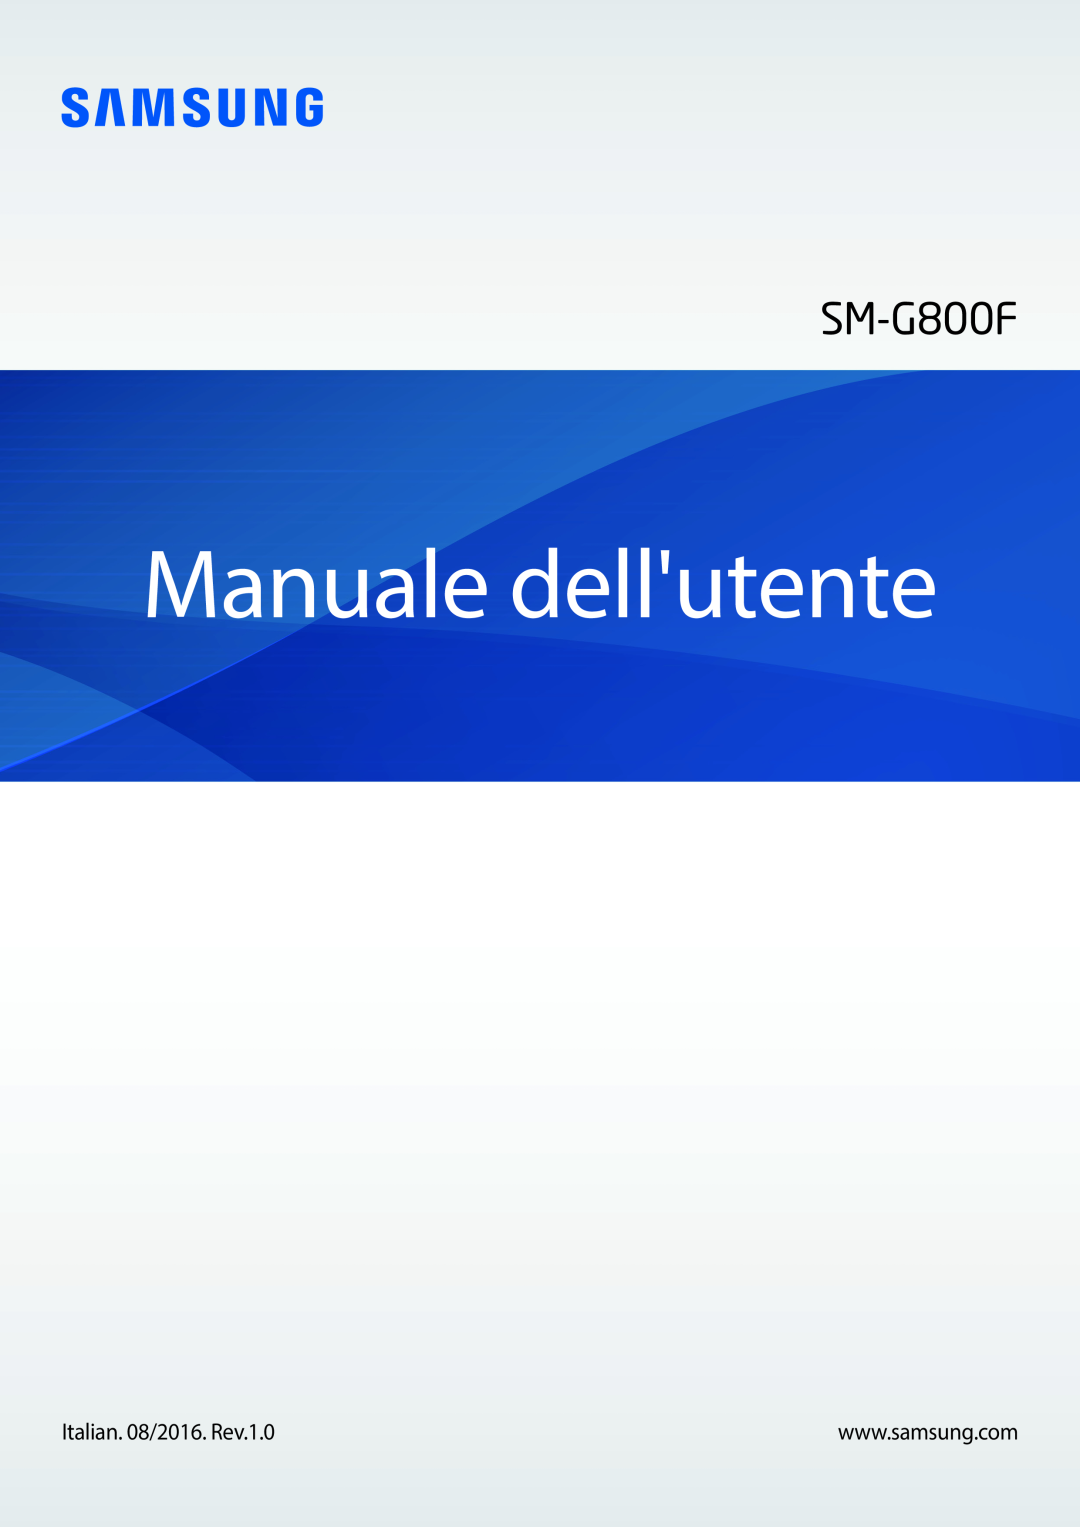 Samsung SM-G800FZDADBT, SM-G800FZWADBT, SM-G800FZKADBT, SM-G800FZBADBT, SM-G800FZKAXEF manual Manuale dellutente 